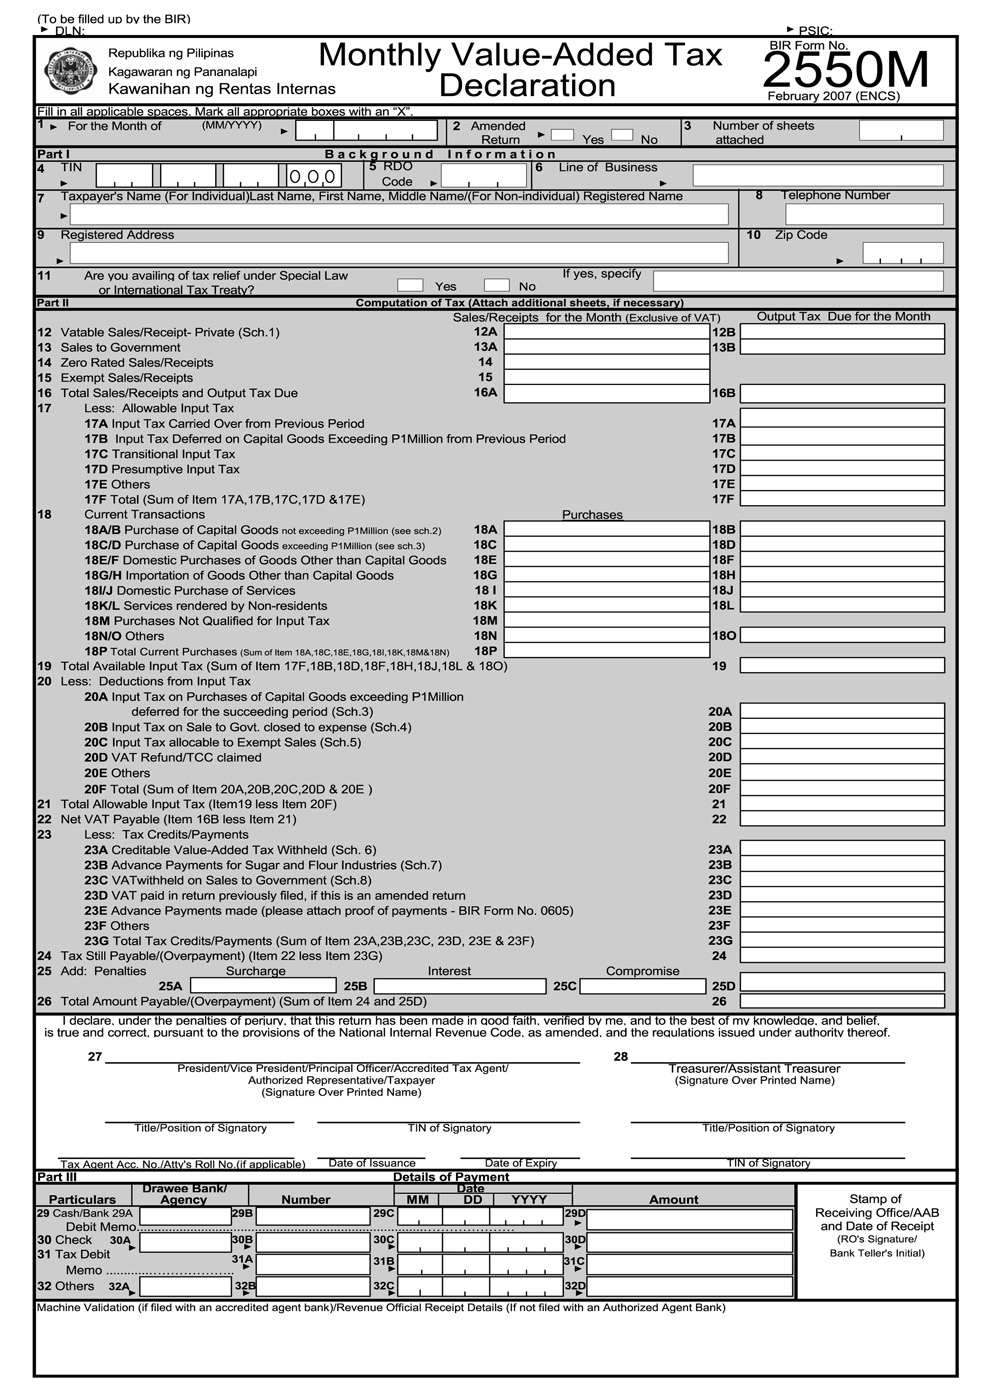 Monthly Value Added Tax Declaration BIR Form 2550M